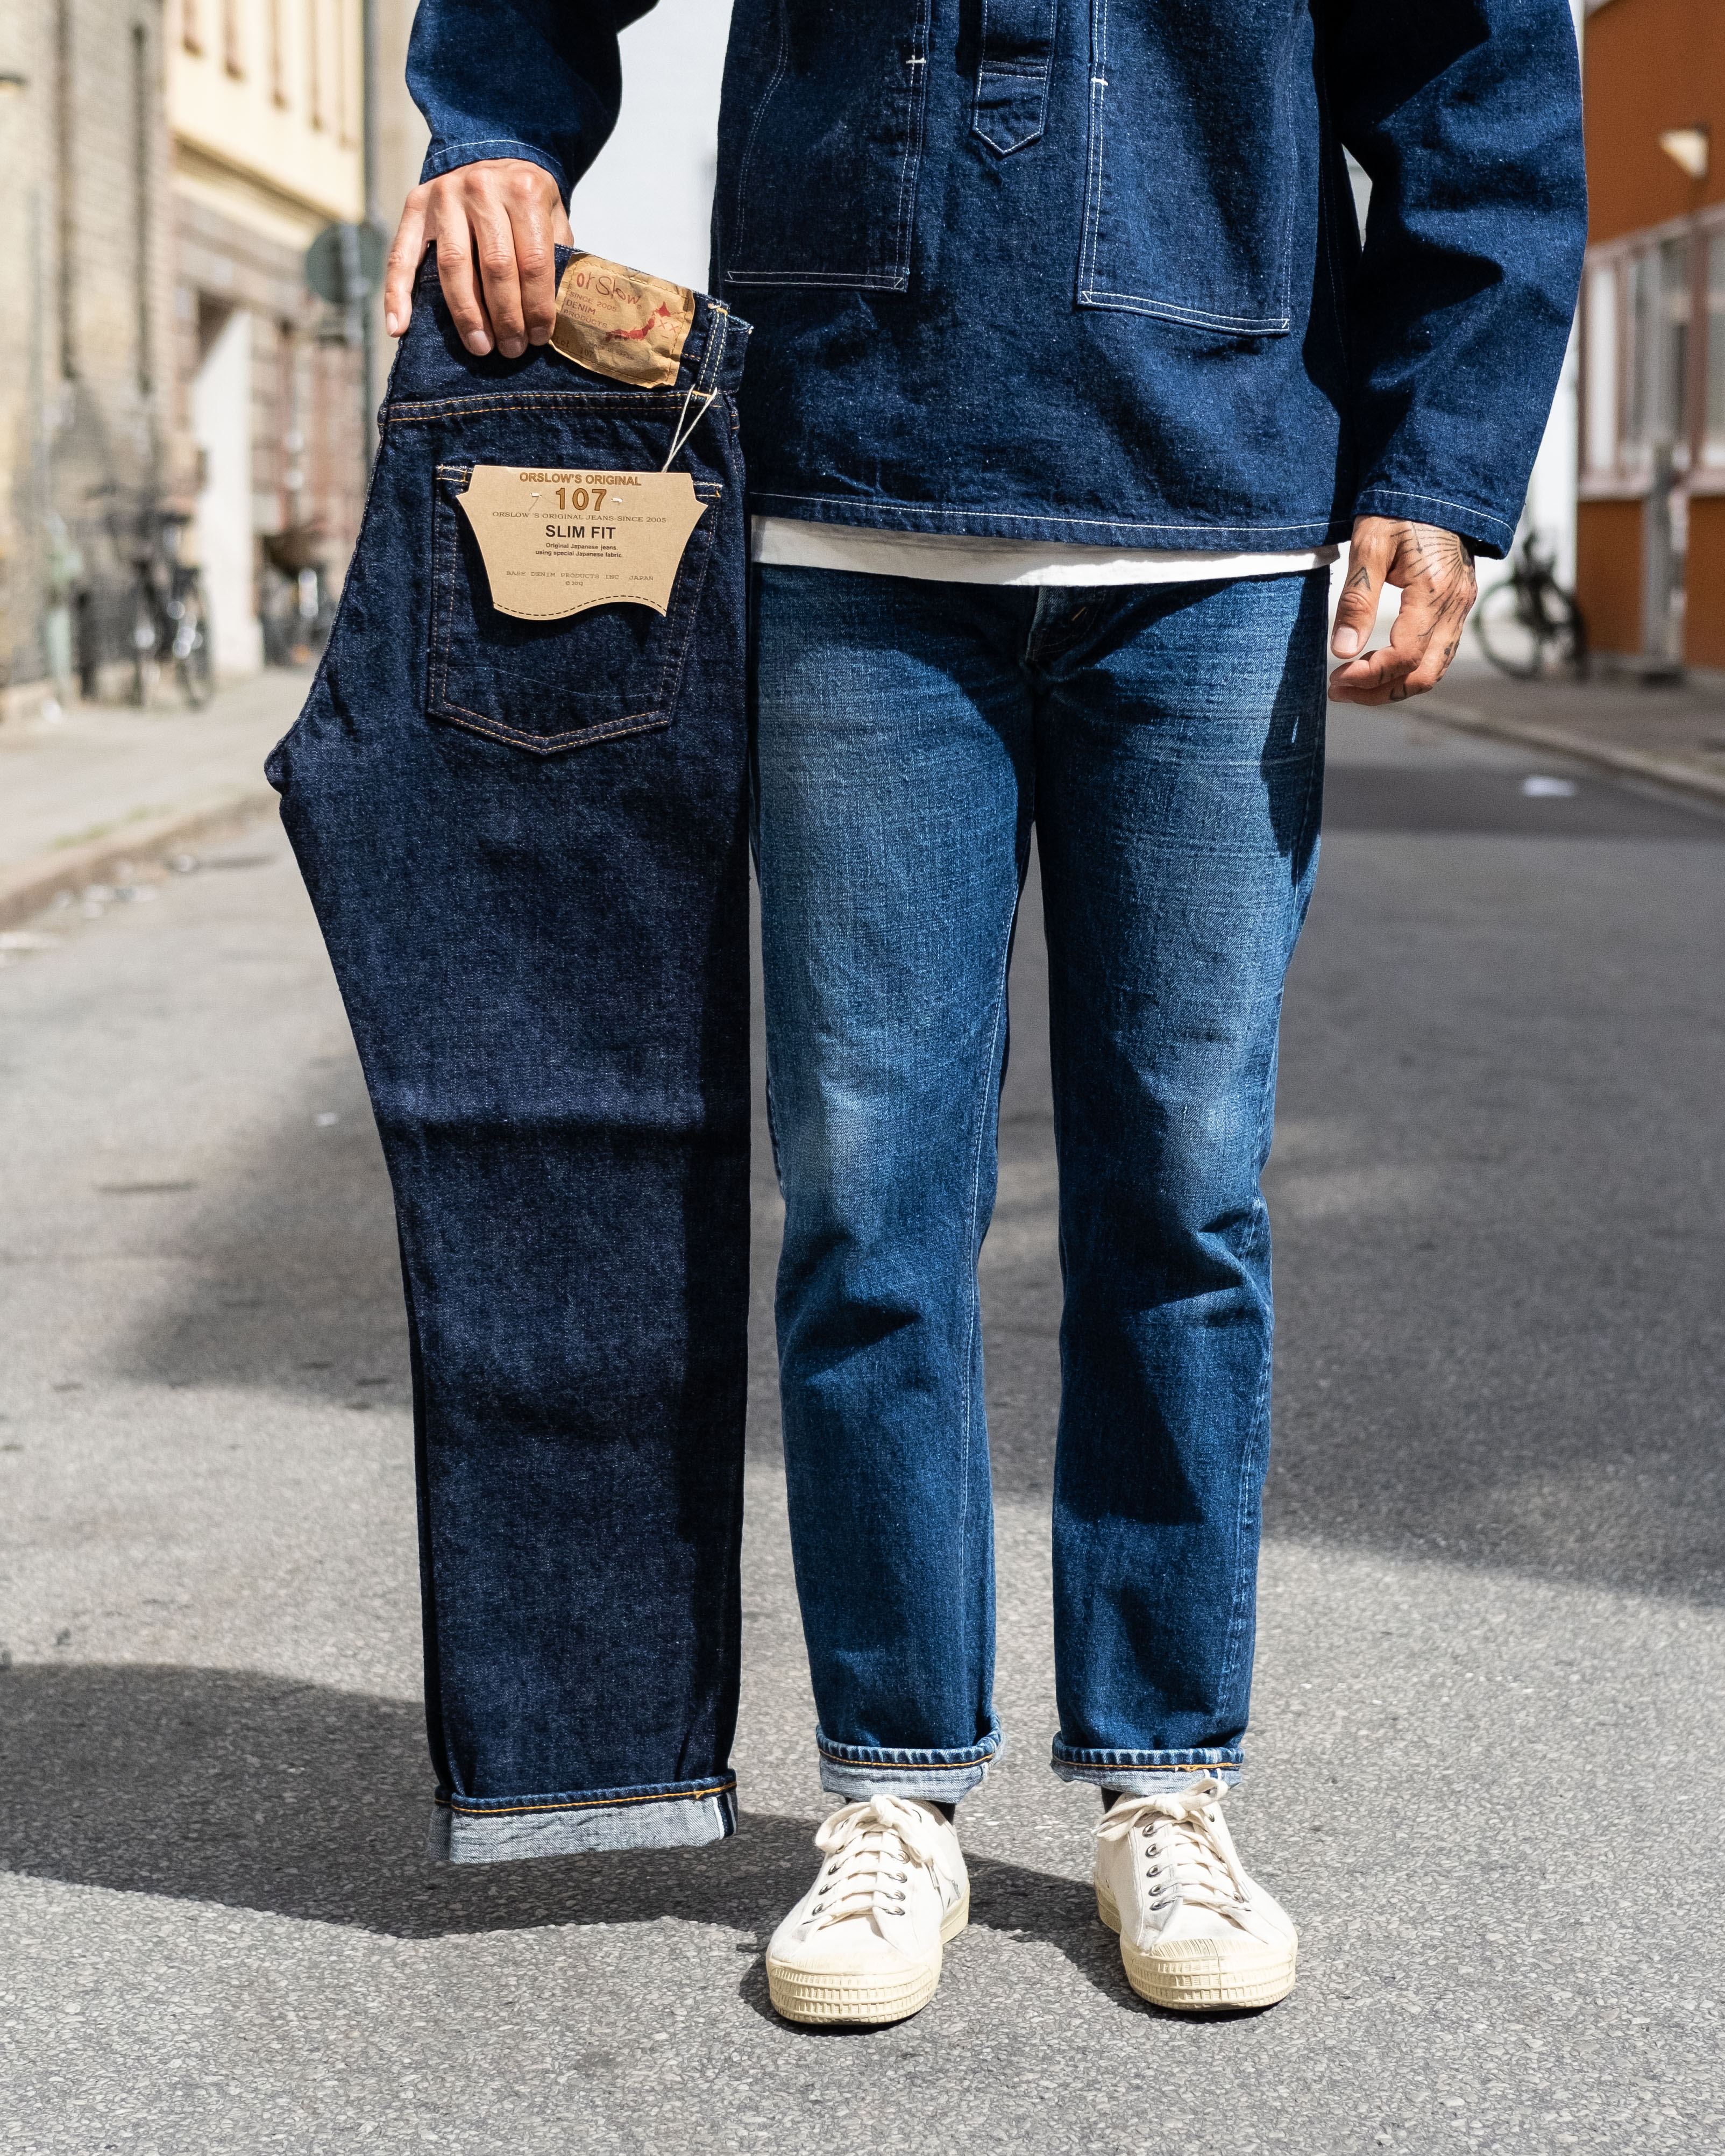 orslow 107 jeans